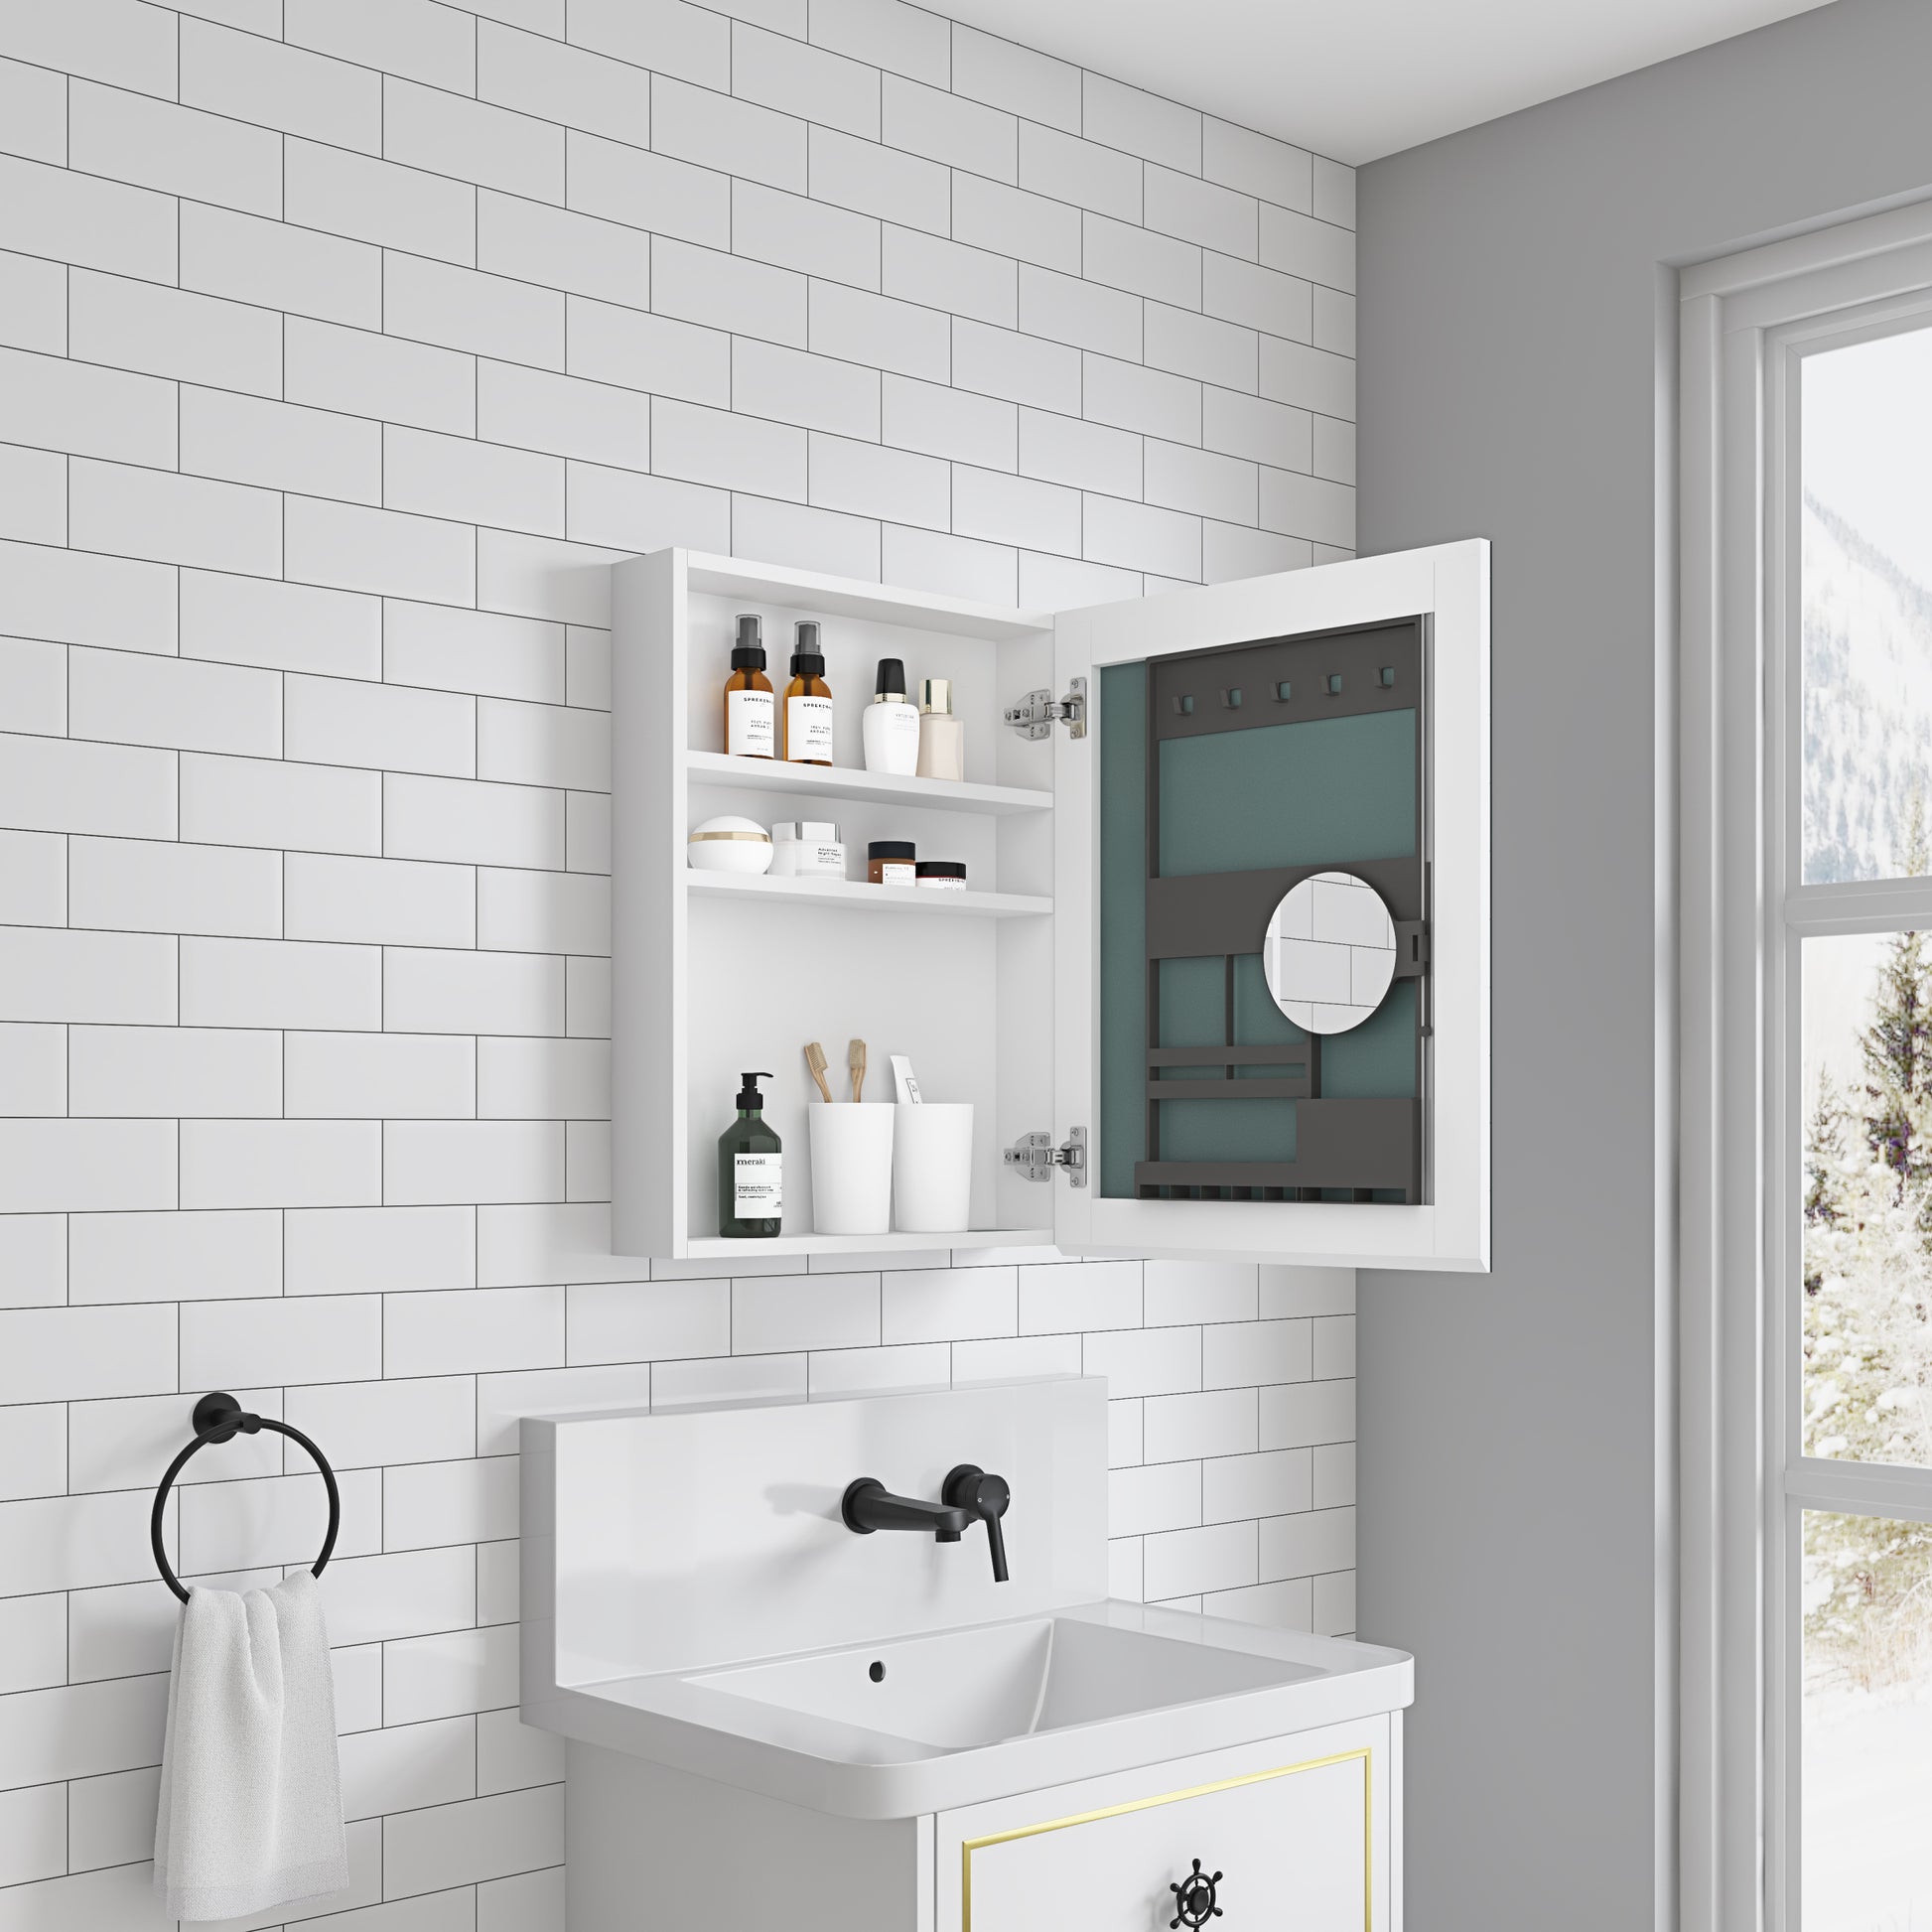 20" W x 26" H Single Door Bathroom Medicine Cabinet white-engineered wood